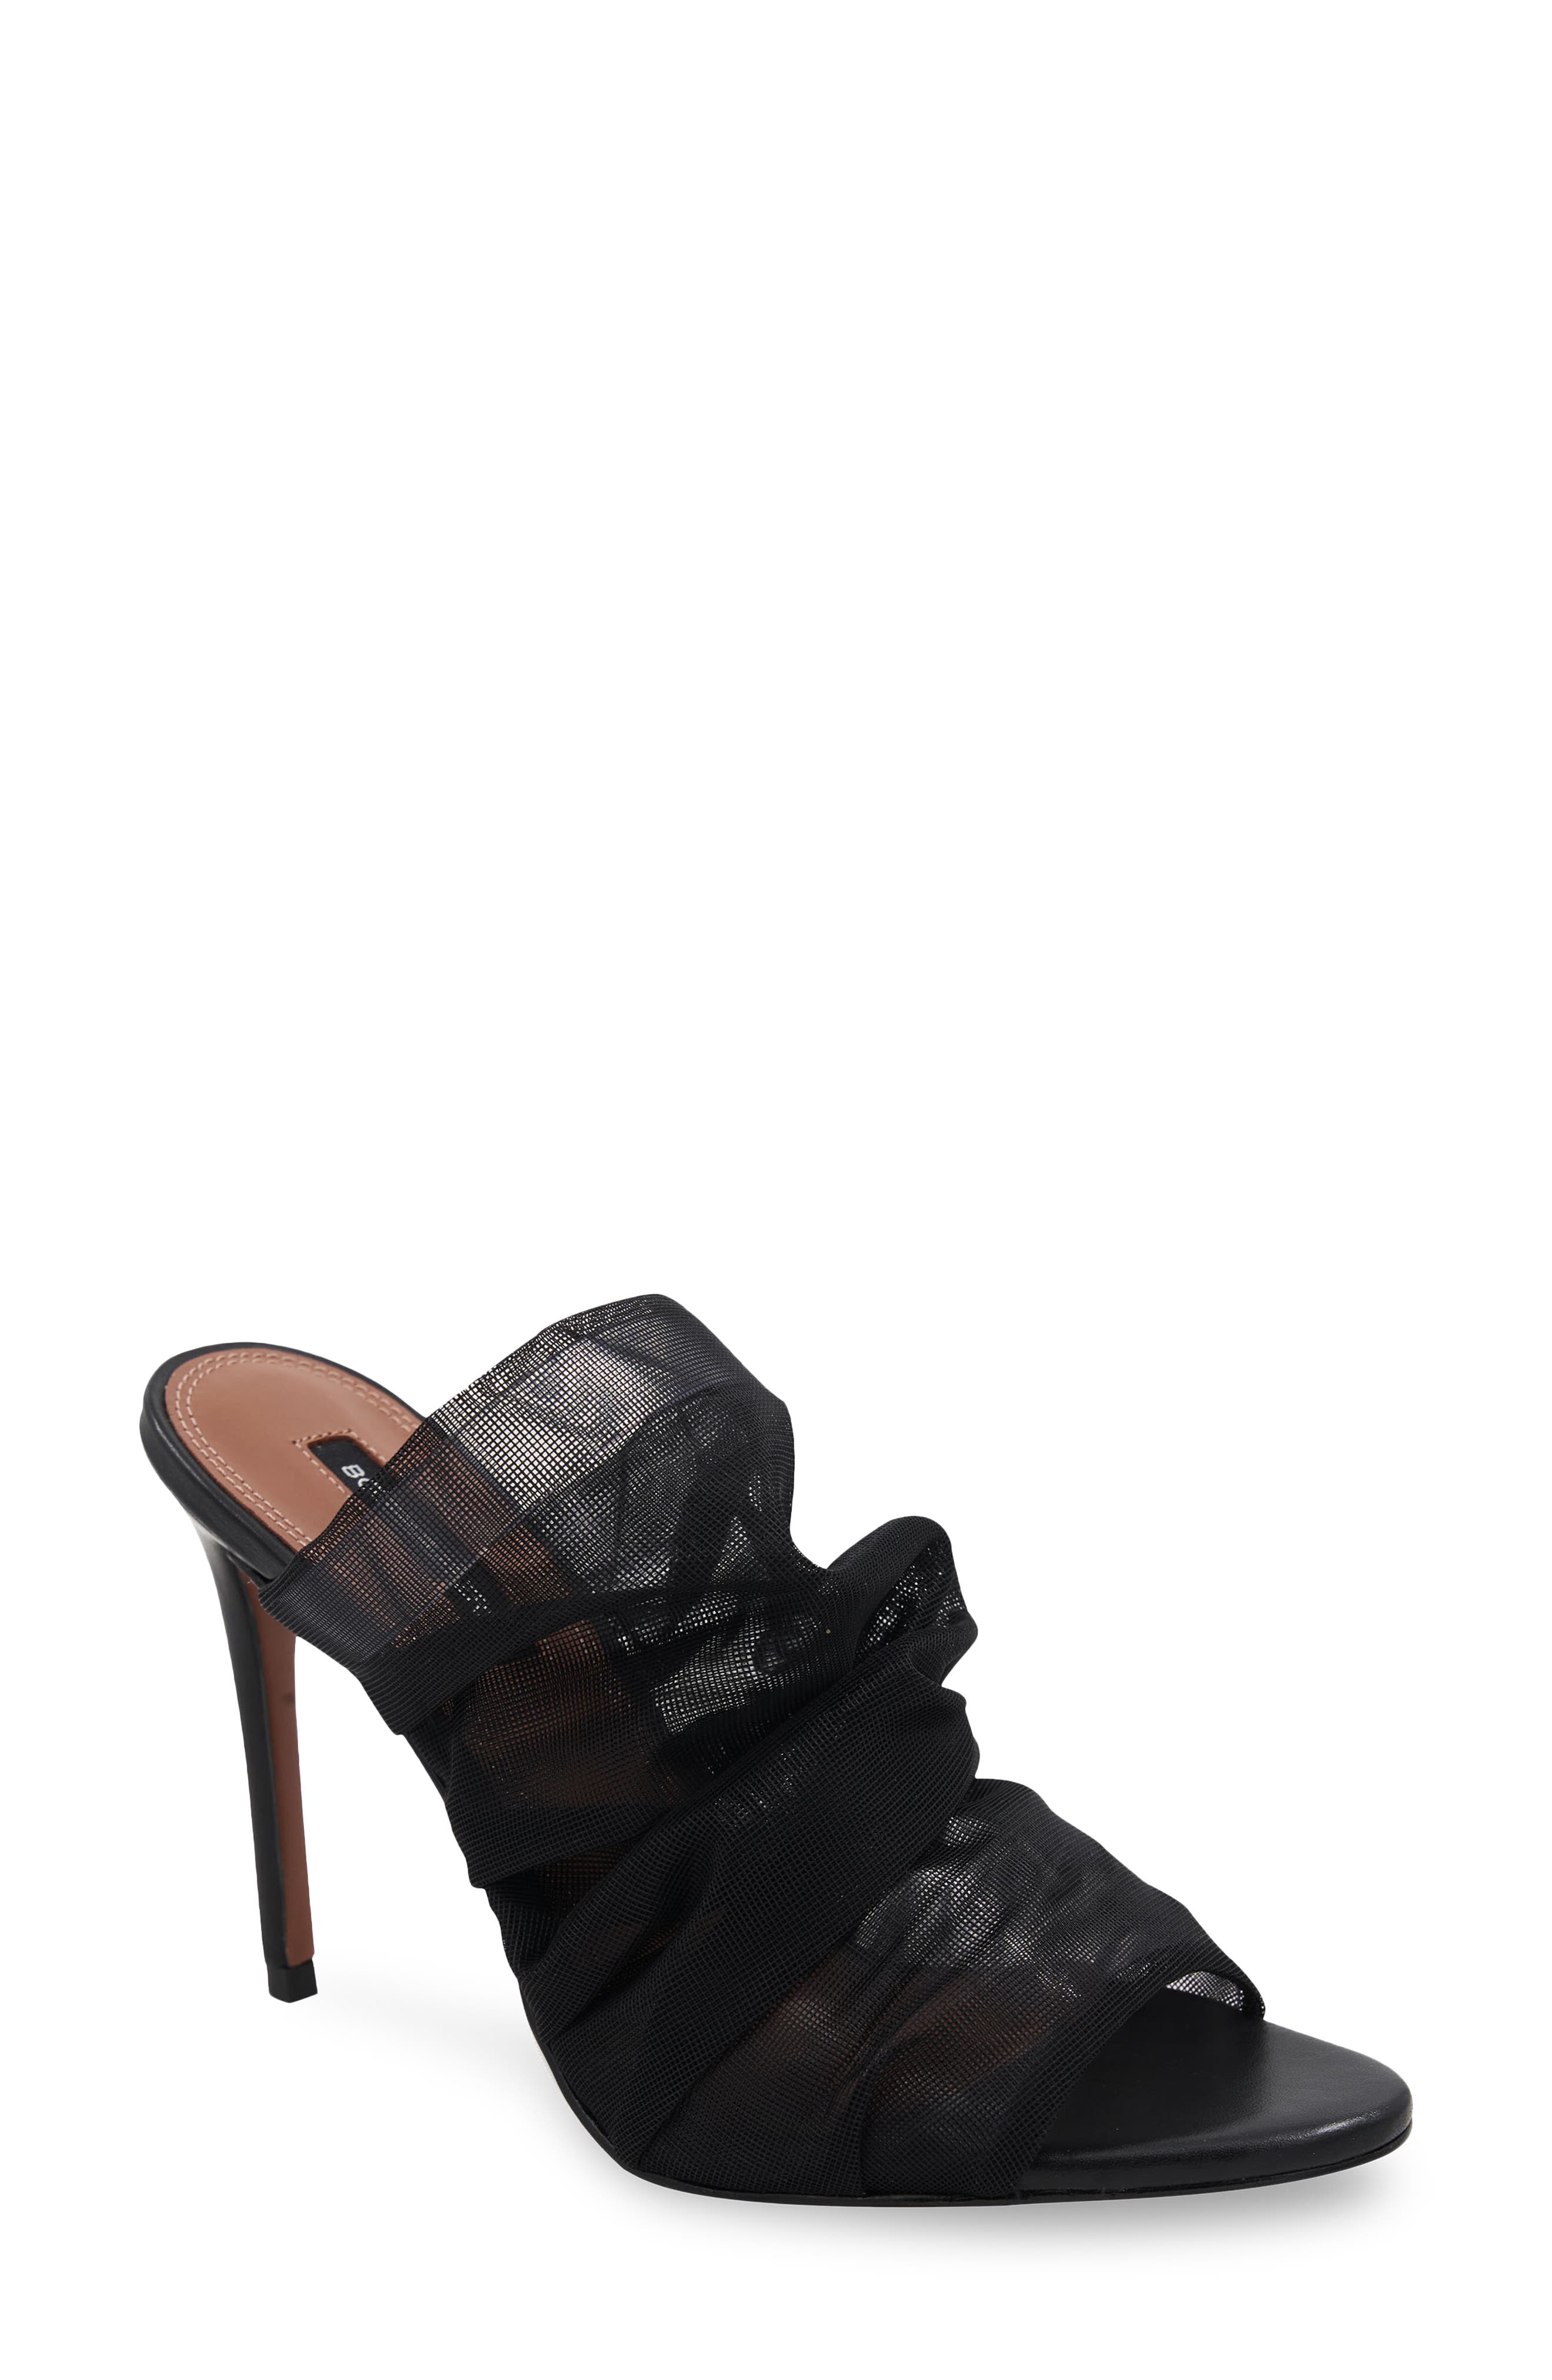 BCBG Max Azria Runway gray Snake Print black satin Neal high Heel sandals Size:9 